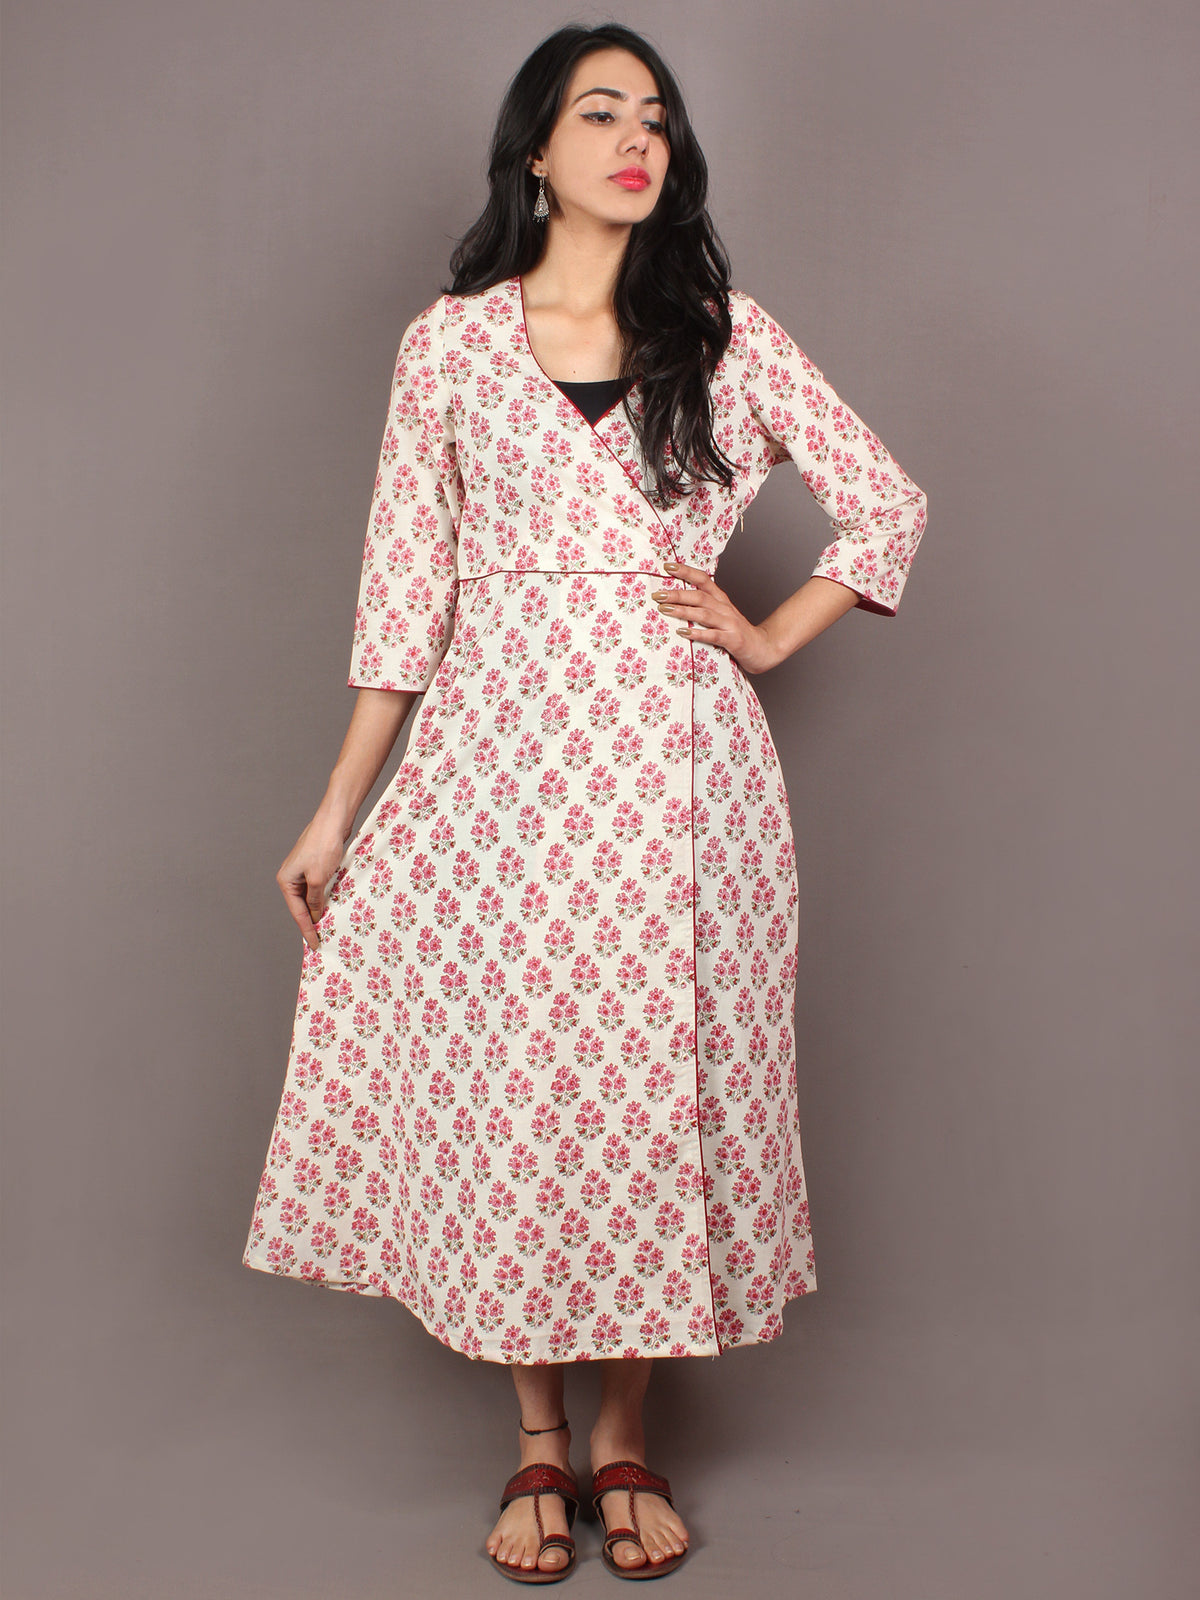 White Pink Mint Green Hand Block Printed Long Cotton Angrakha Dress - D2012301